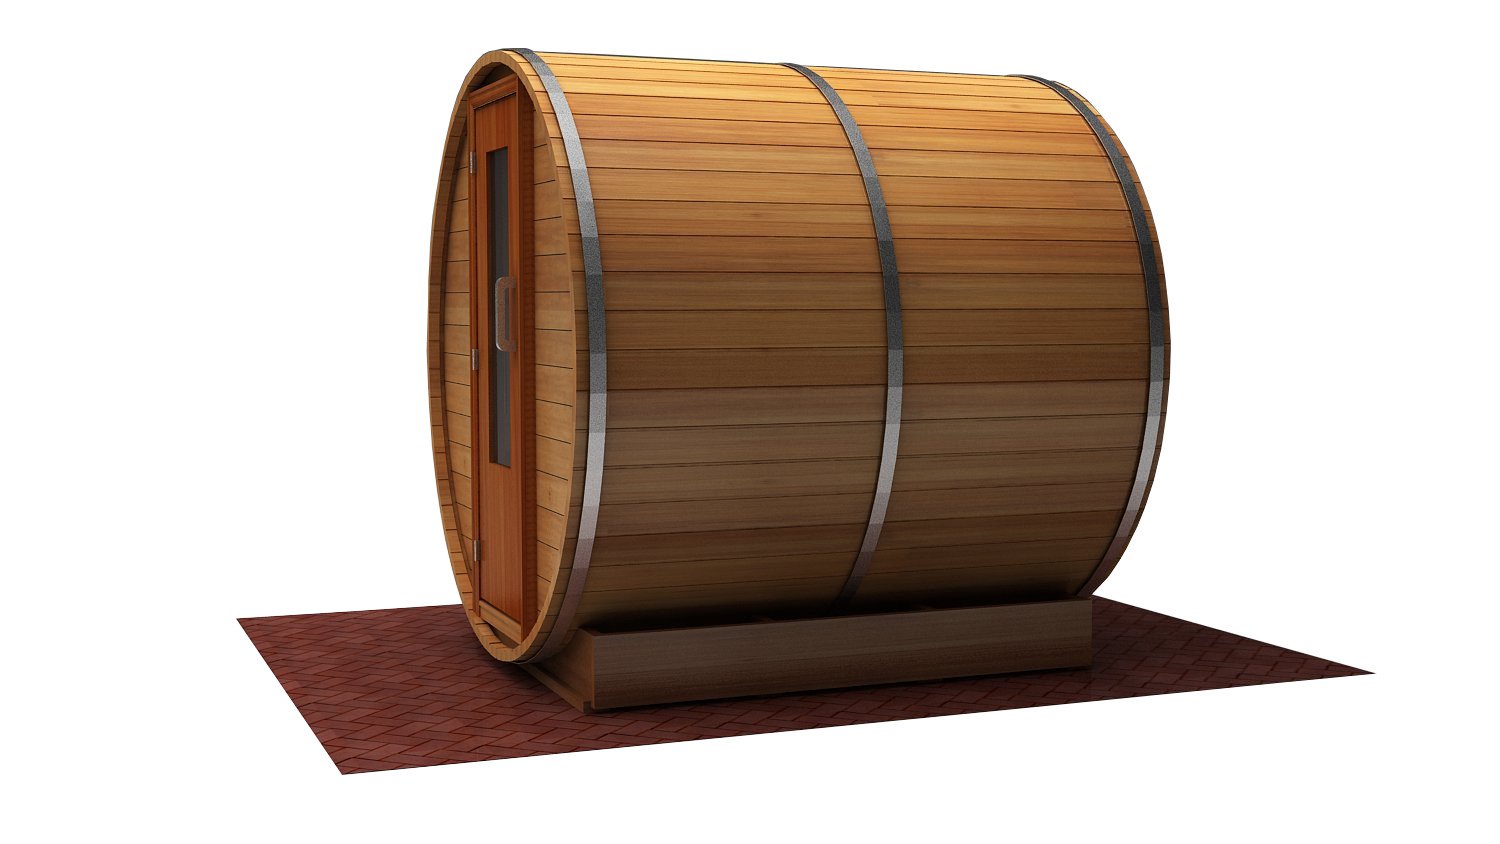 Barrel Sauna Kit - Outdoor Barrel Sauna Room 7\' x 12\' - Electric Heater with Change Room